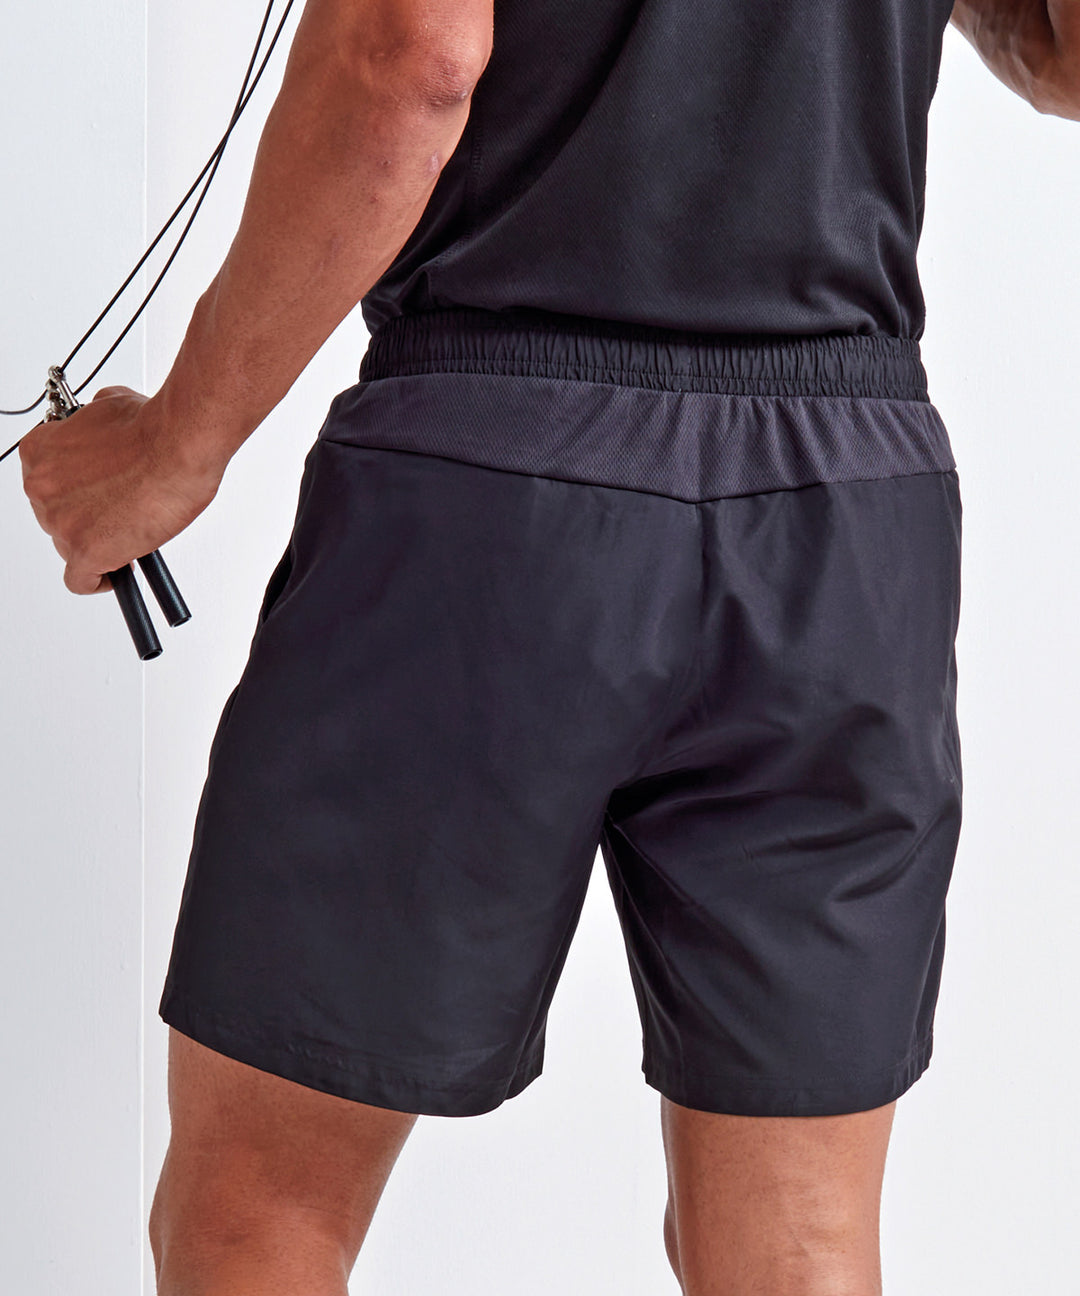 TriDri® PT training shorts - New